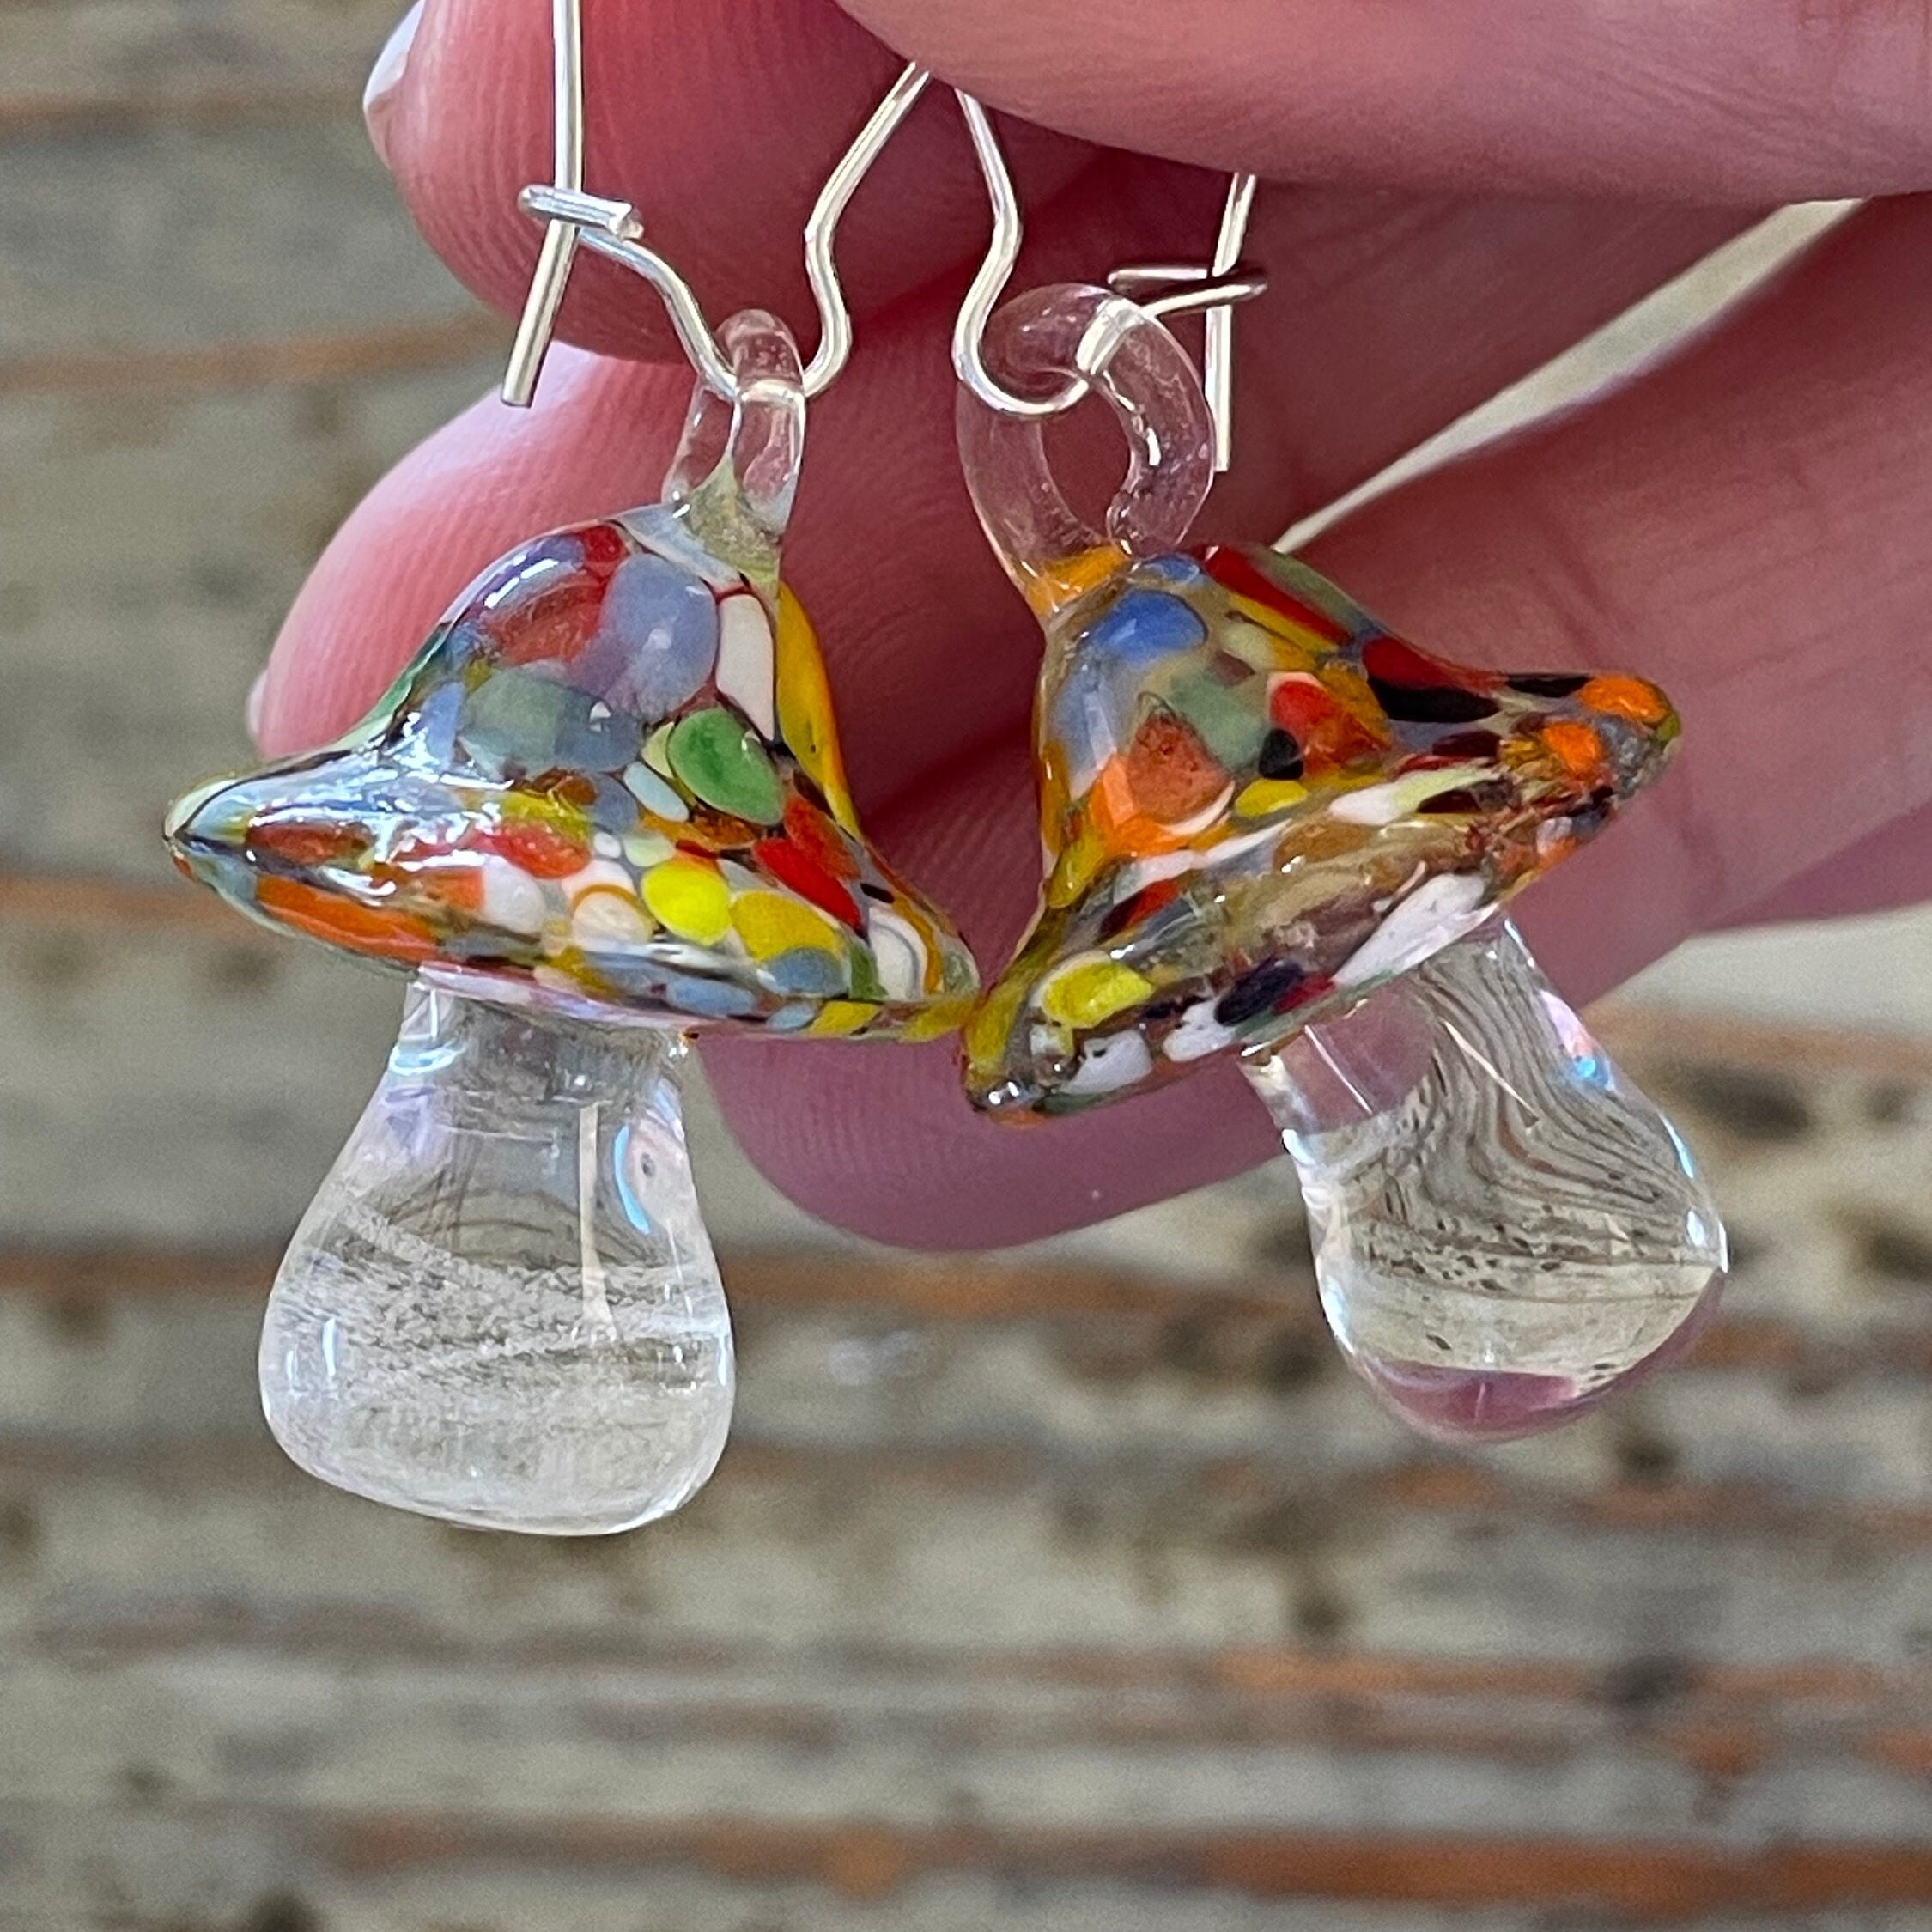  100pcs Mushroom Beads,Handmade Glass Mushrooms,Lampwork Beads,Lampwork  Mushrooms Charms,Glass Beads for DIY Necklace Earrings Bracelet Jewelry  Making (Dark Green)